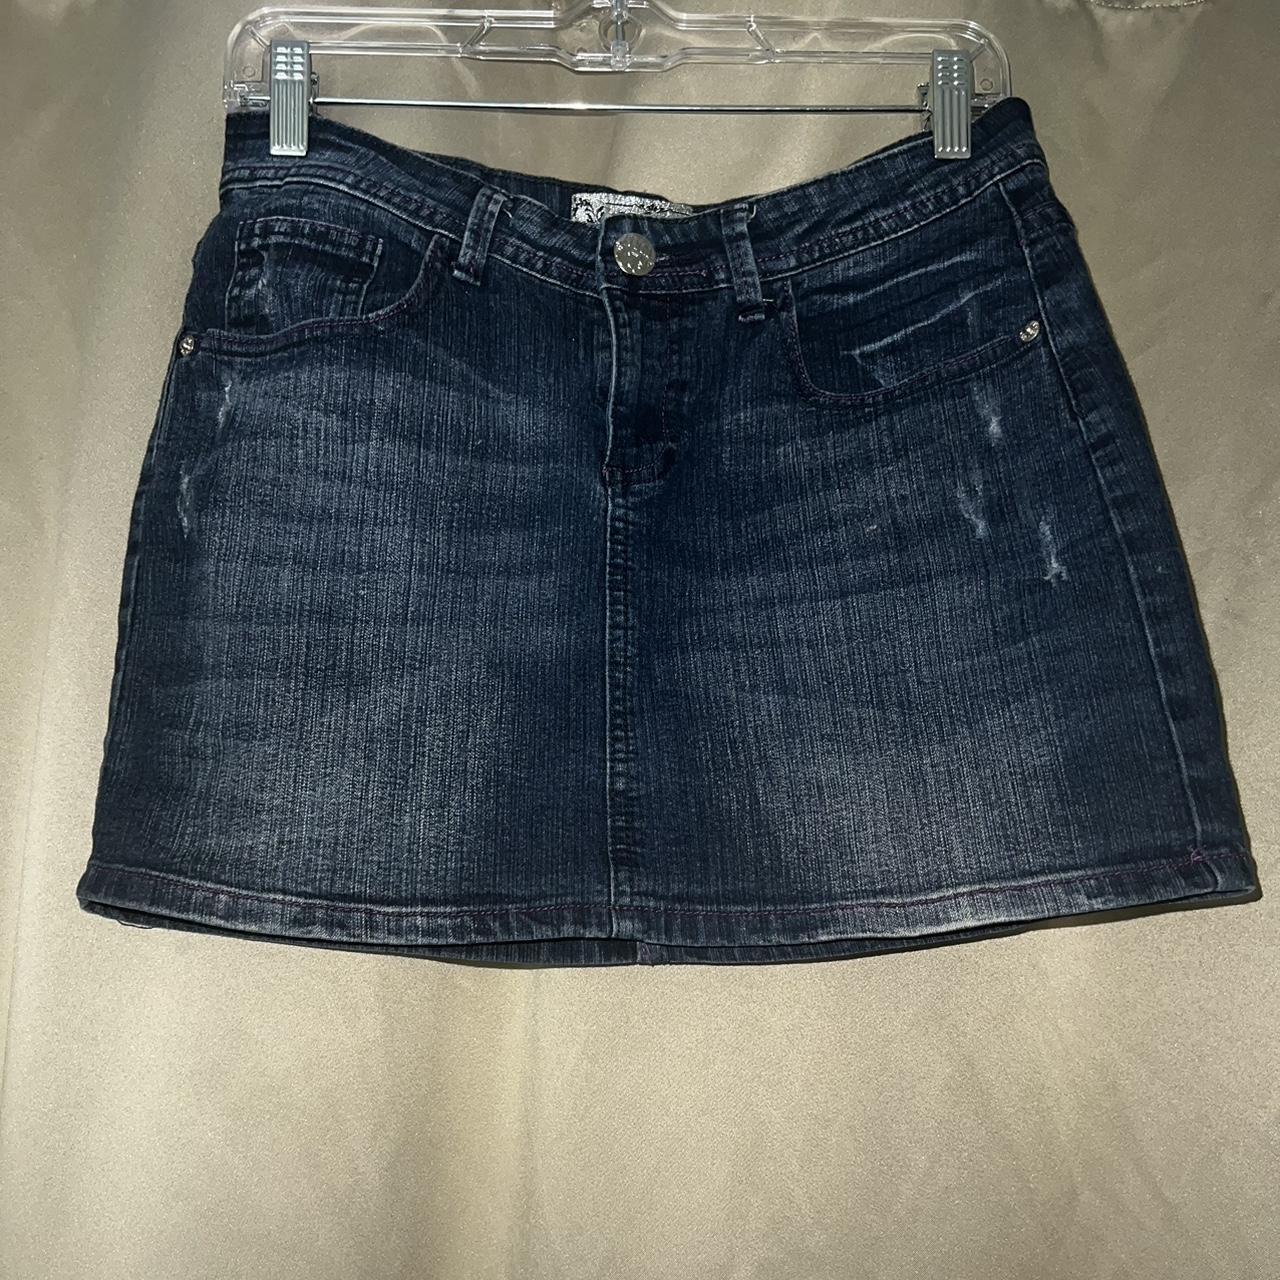 Vintage denim mini skirt Can for s/m - Depop